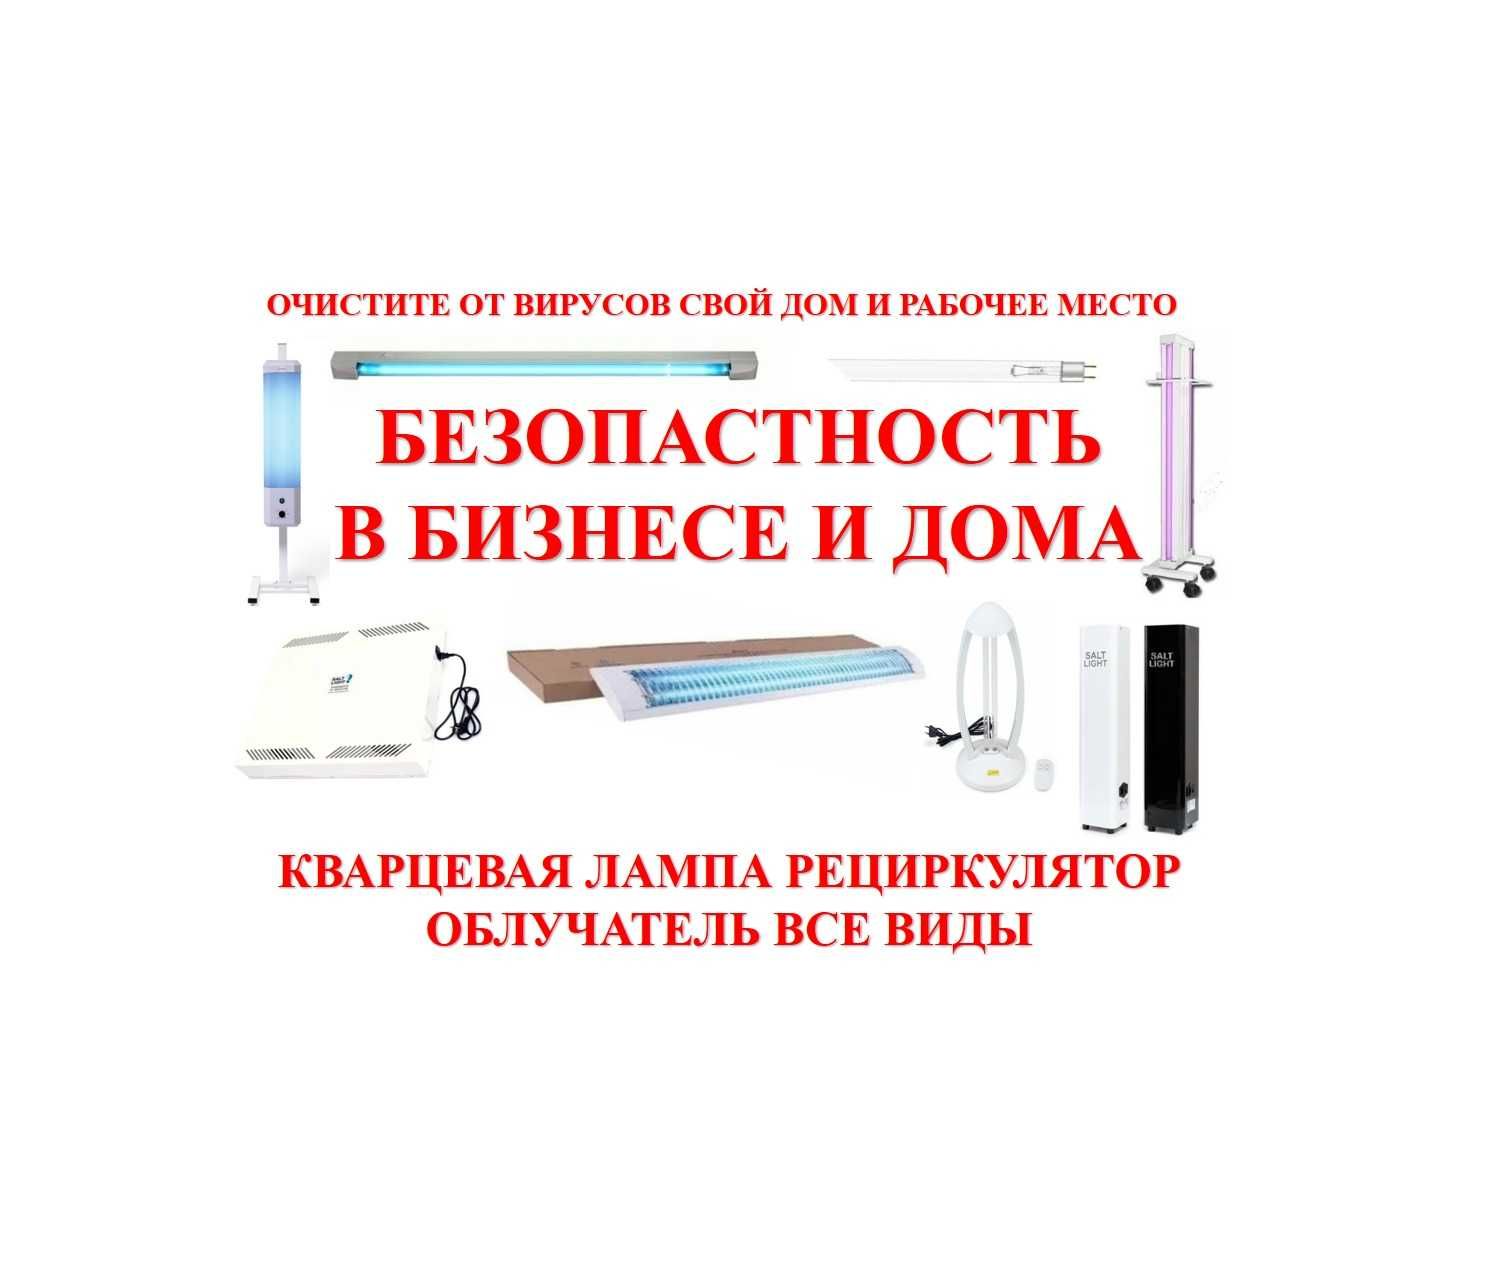 Павлодар все виды кварцевая лампа рециркулятор доствка сертификат безн